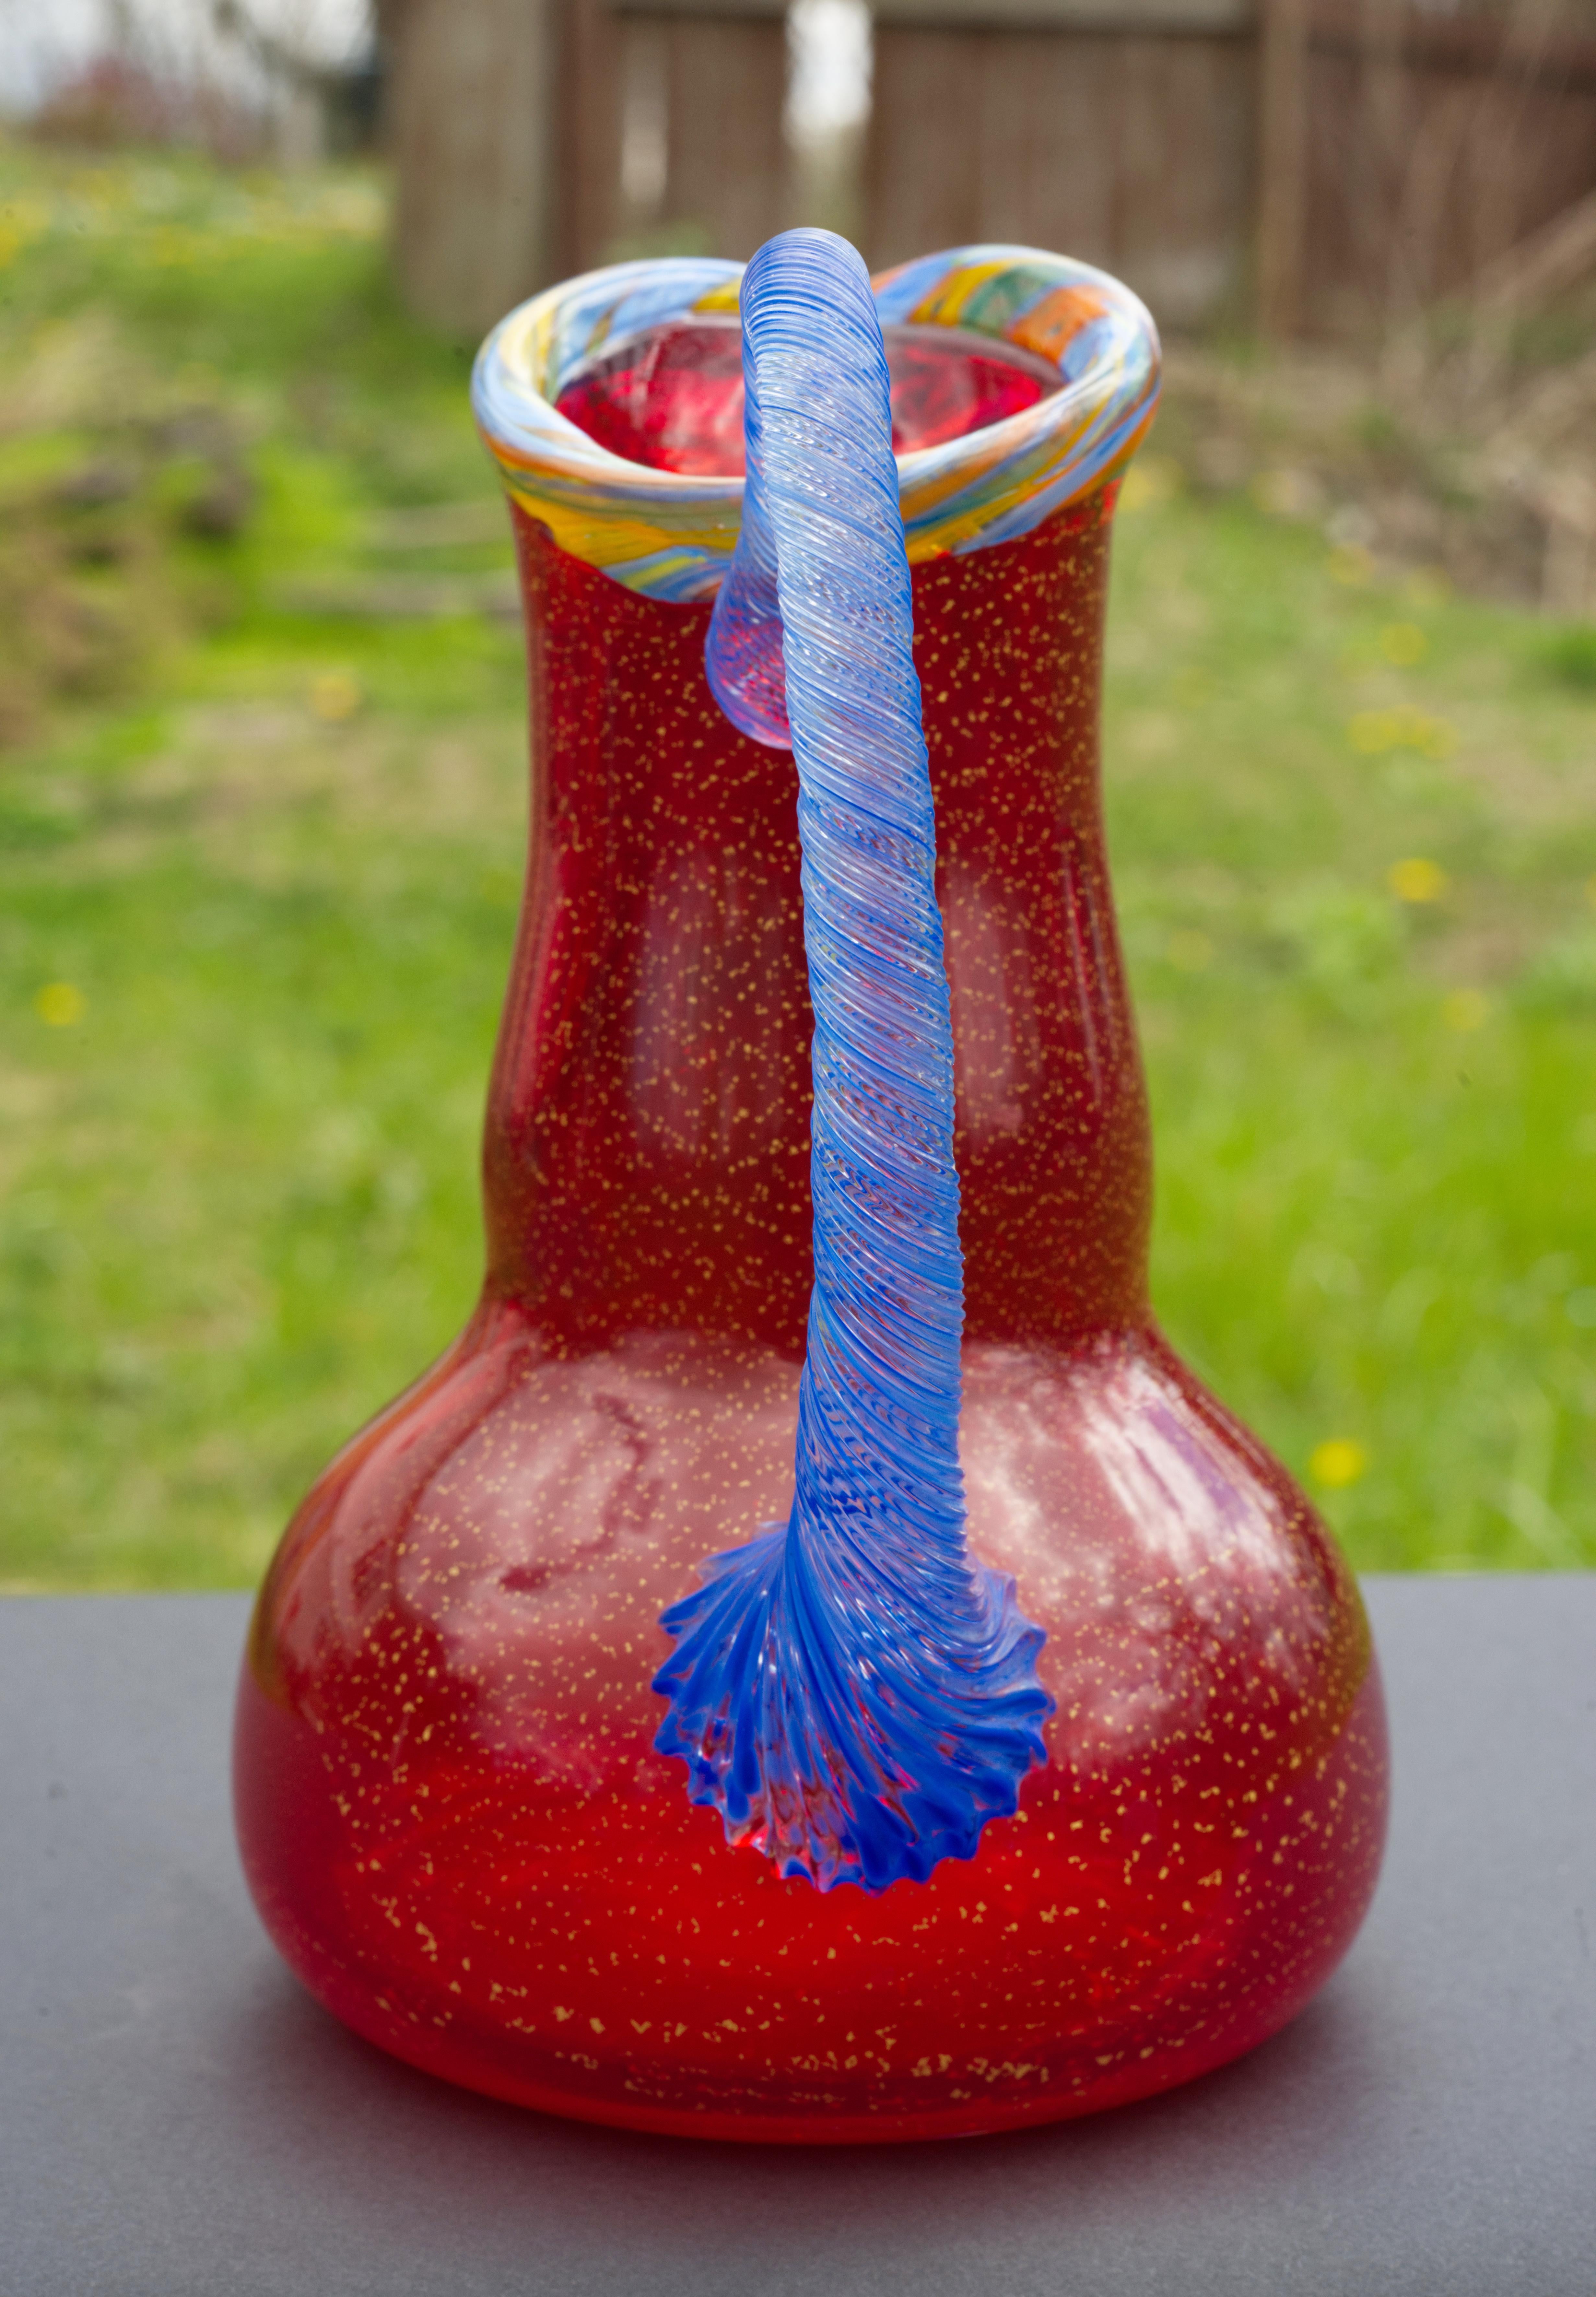 Peter Secrest Art Glass Vase Pitcher Red Gold Flakes Postmodern 2003 For Sale 3